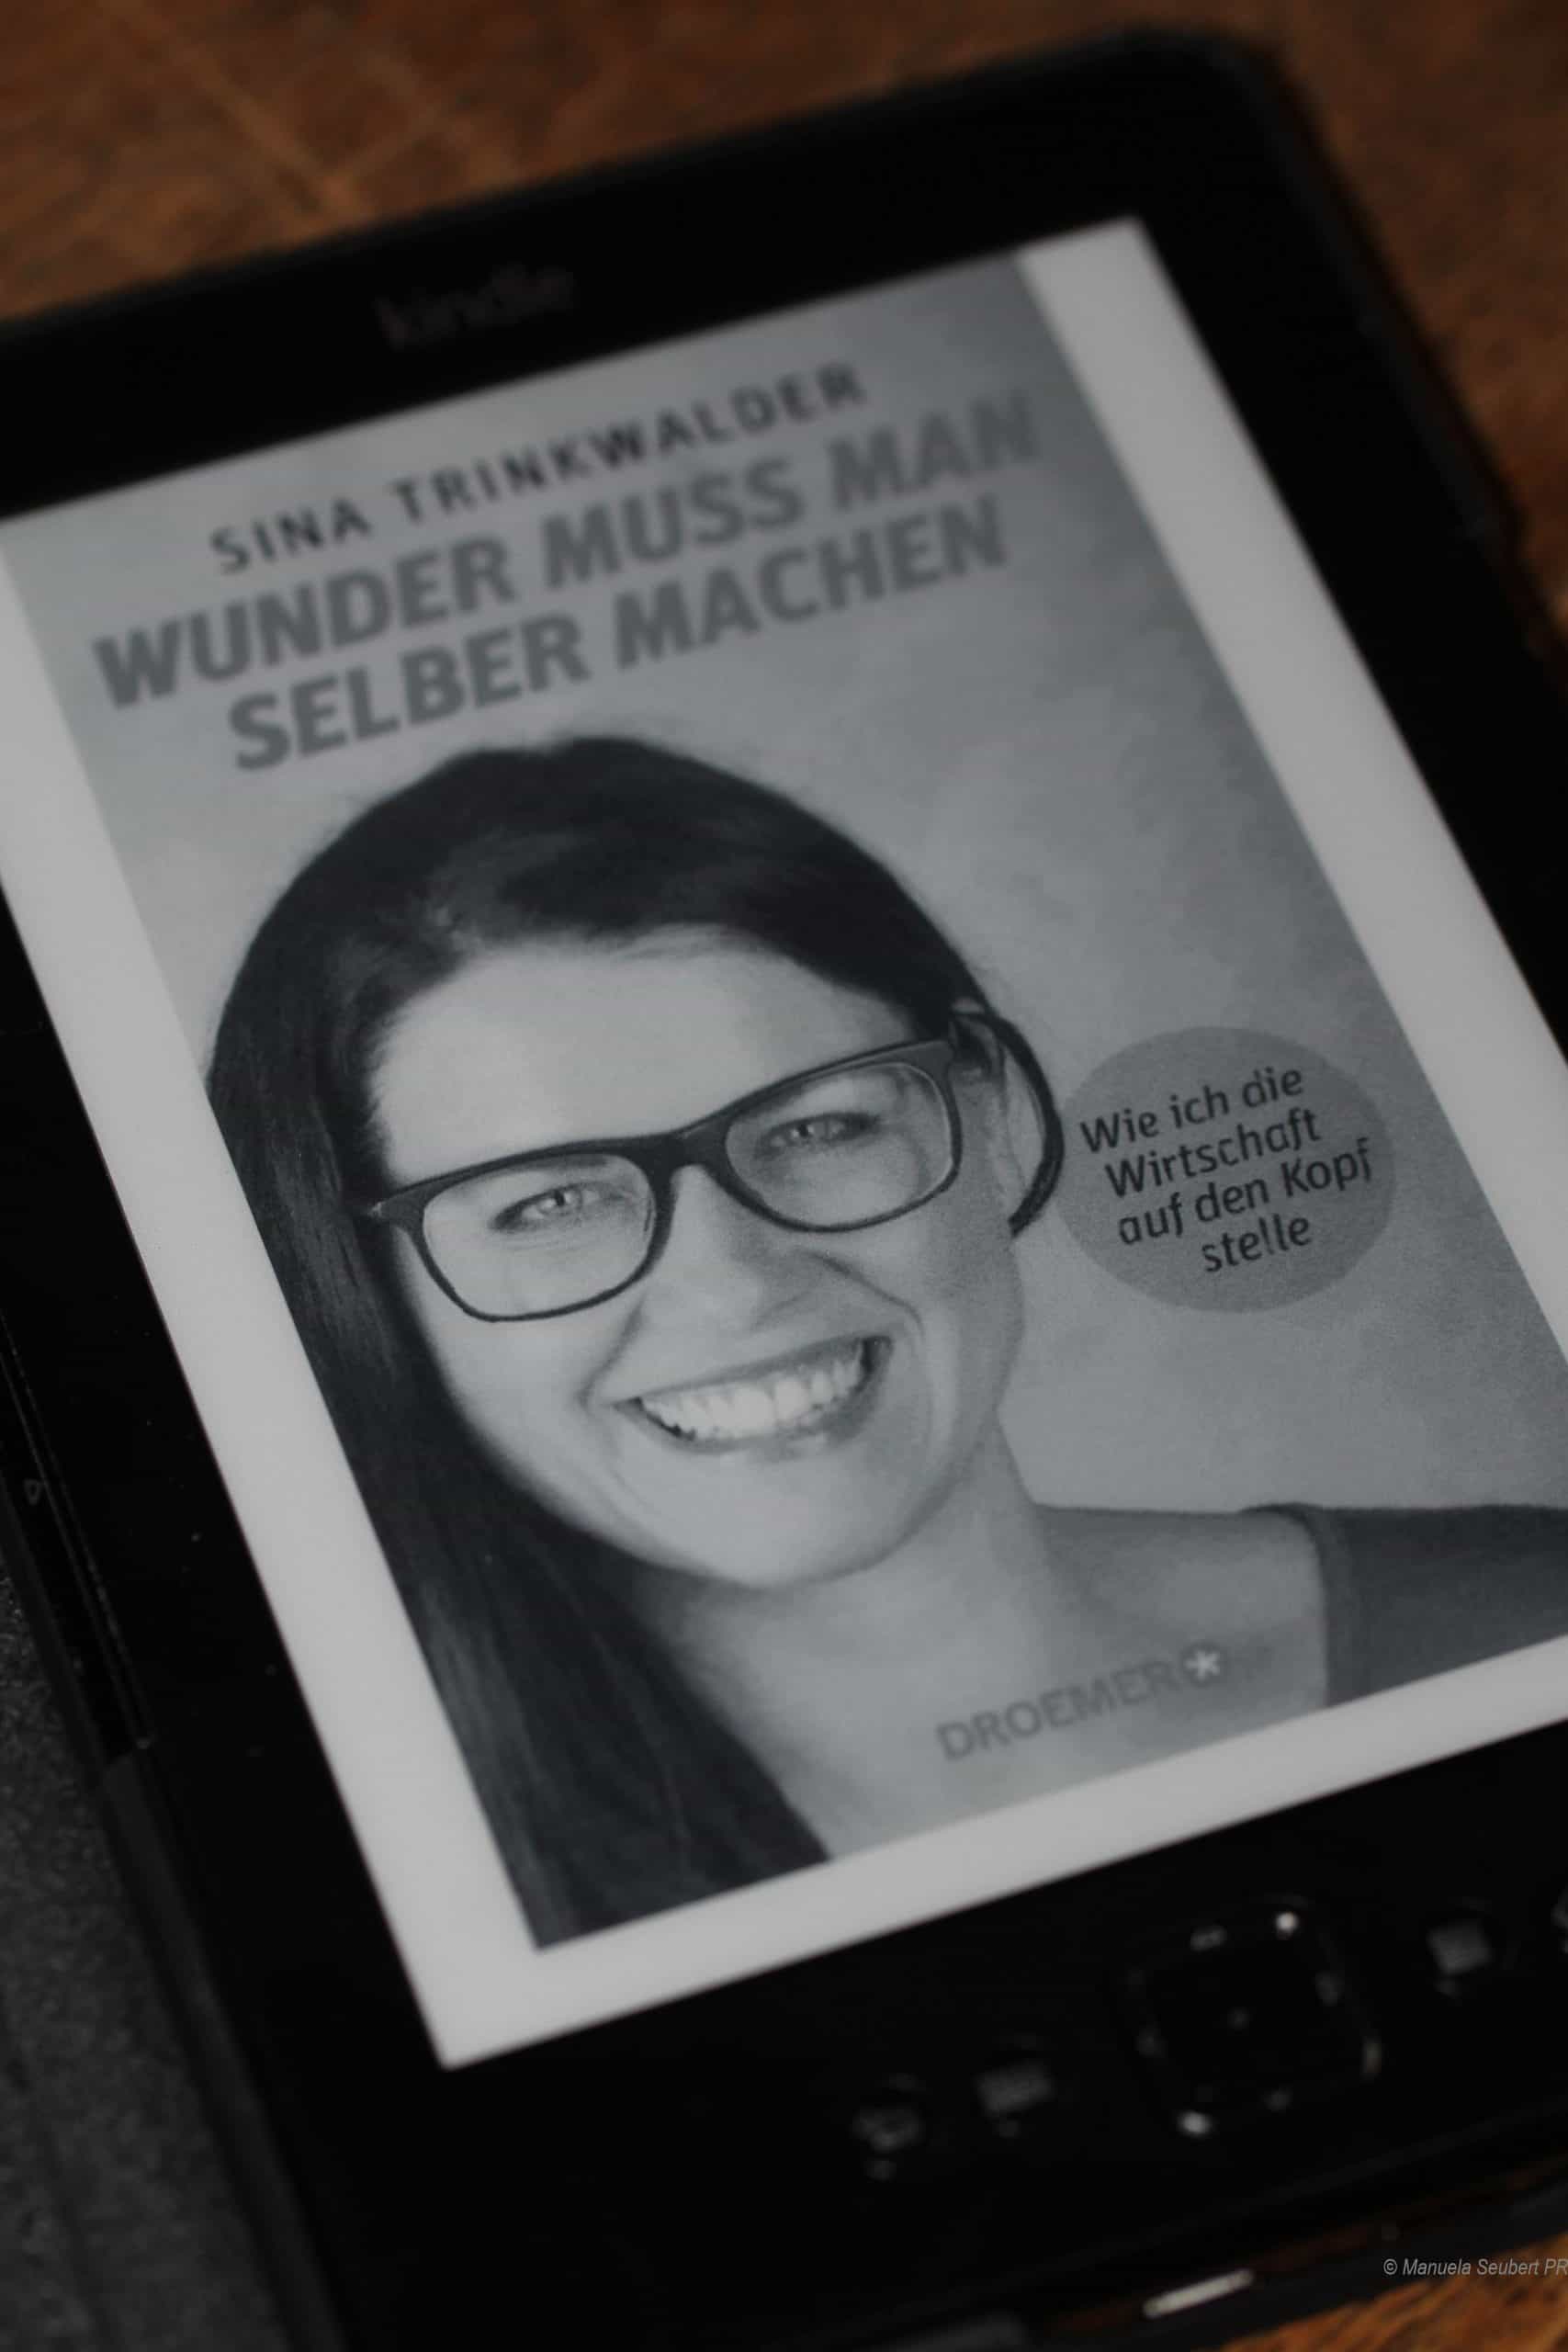 You are currently viewing Rezension: Wunder muss man selber machen, Sina Trinkwalder, 2013